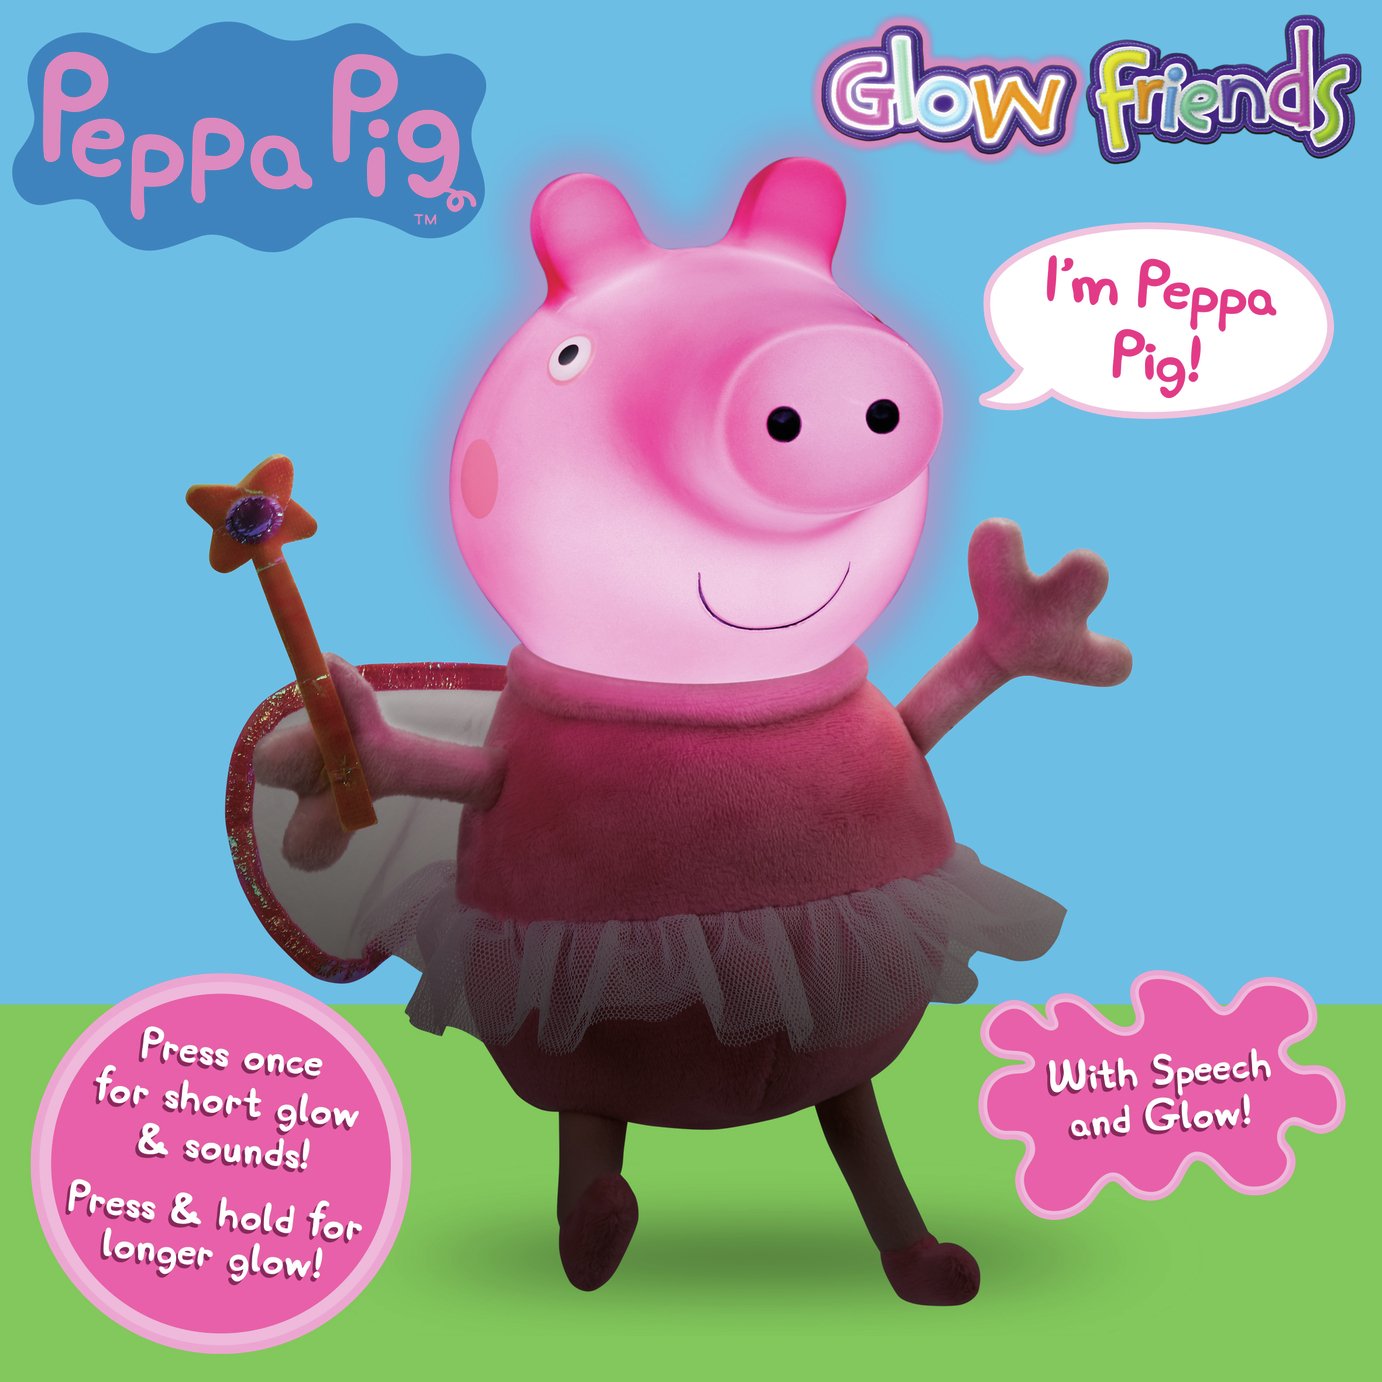 peppa pig glow friends argos